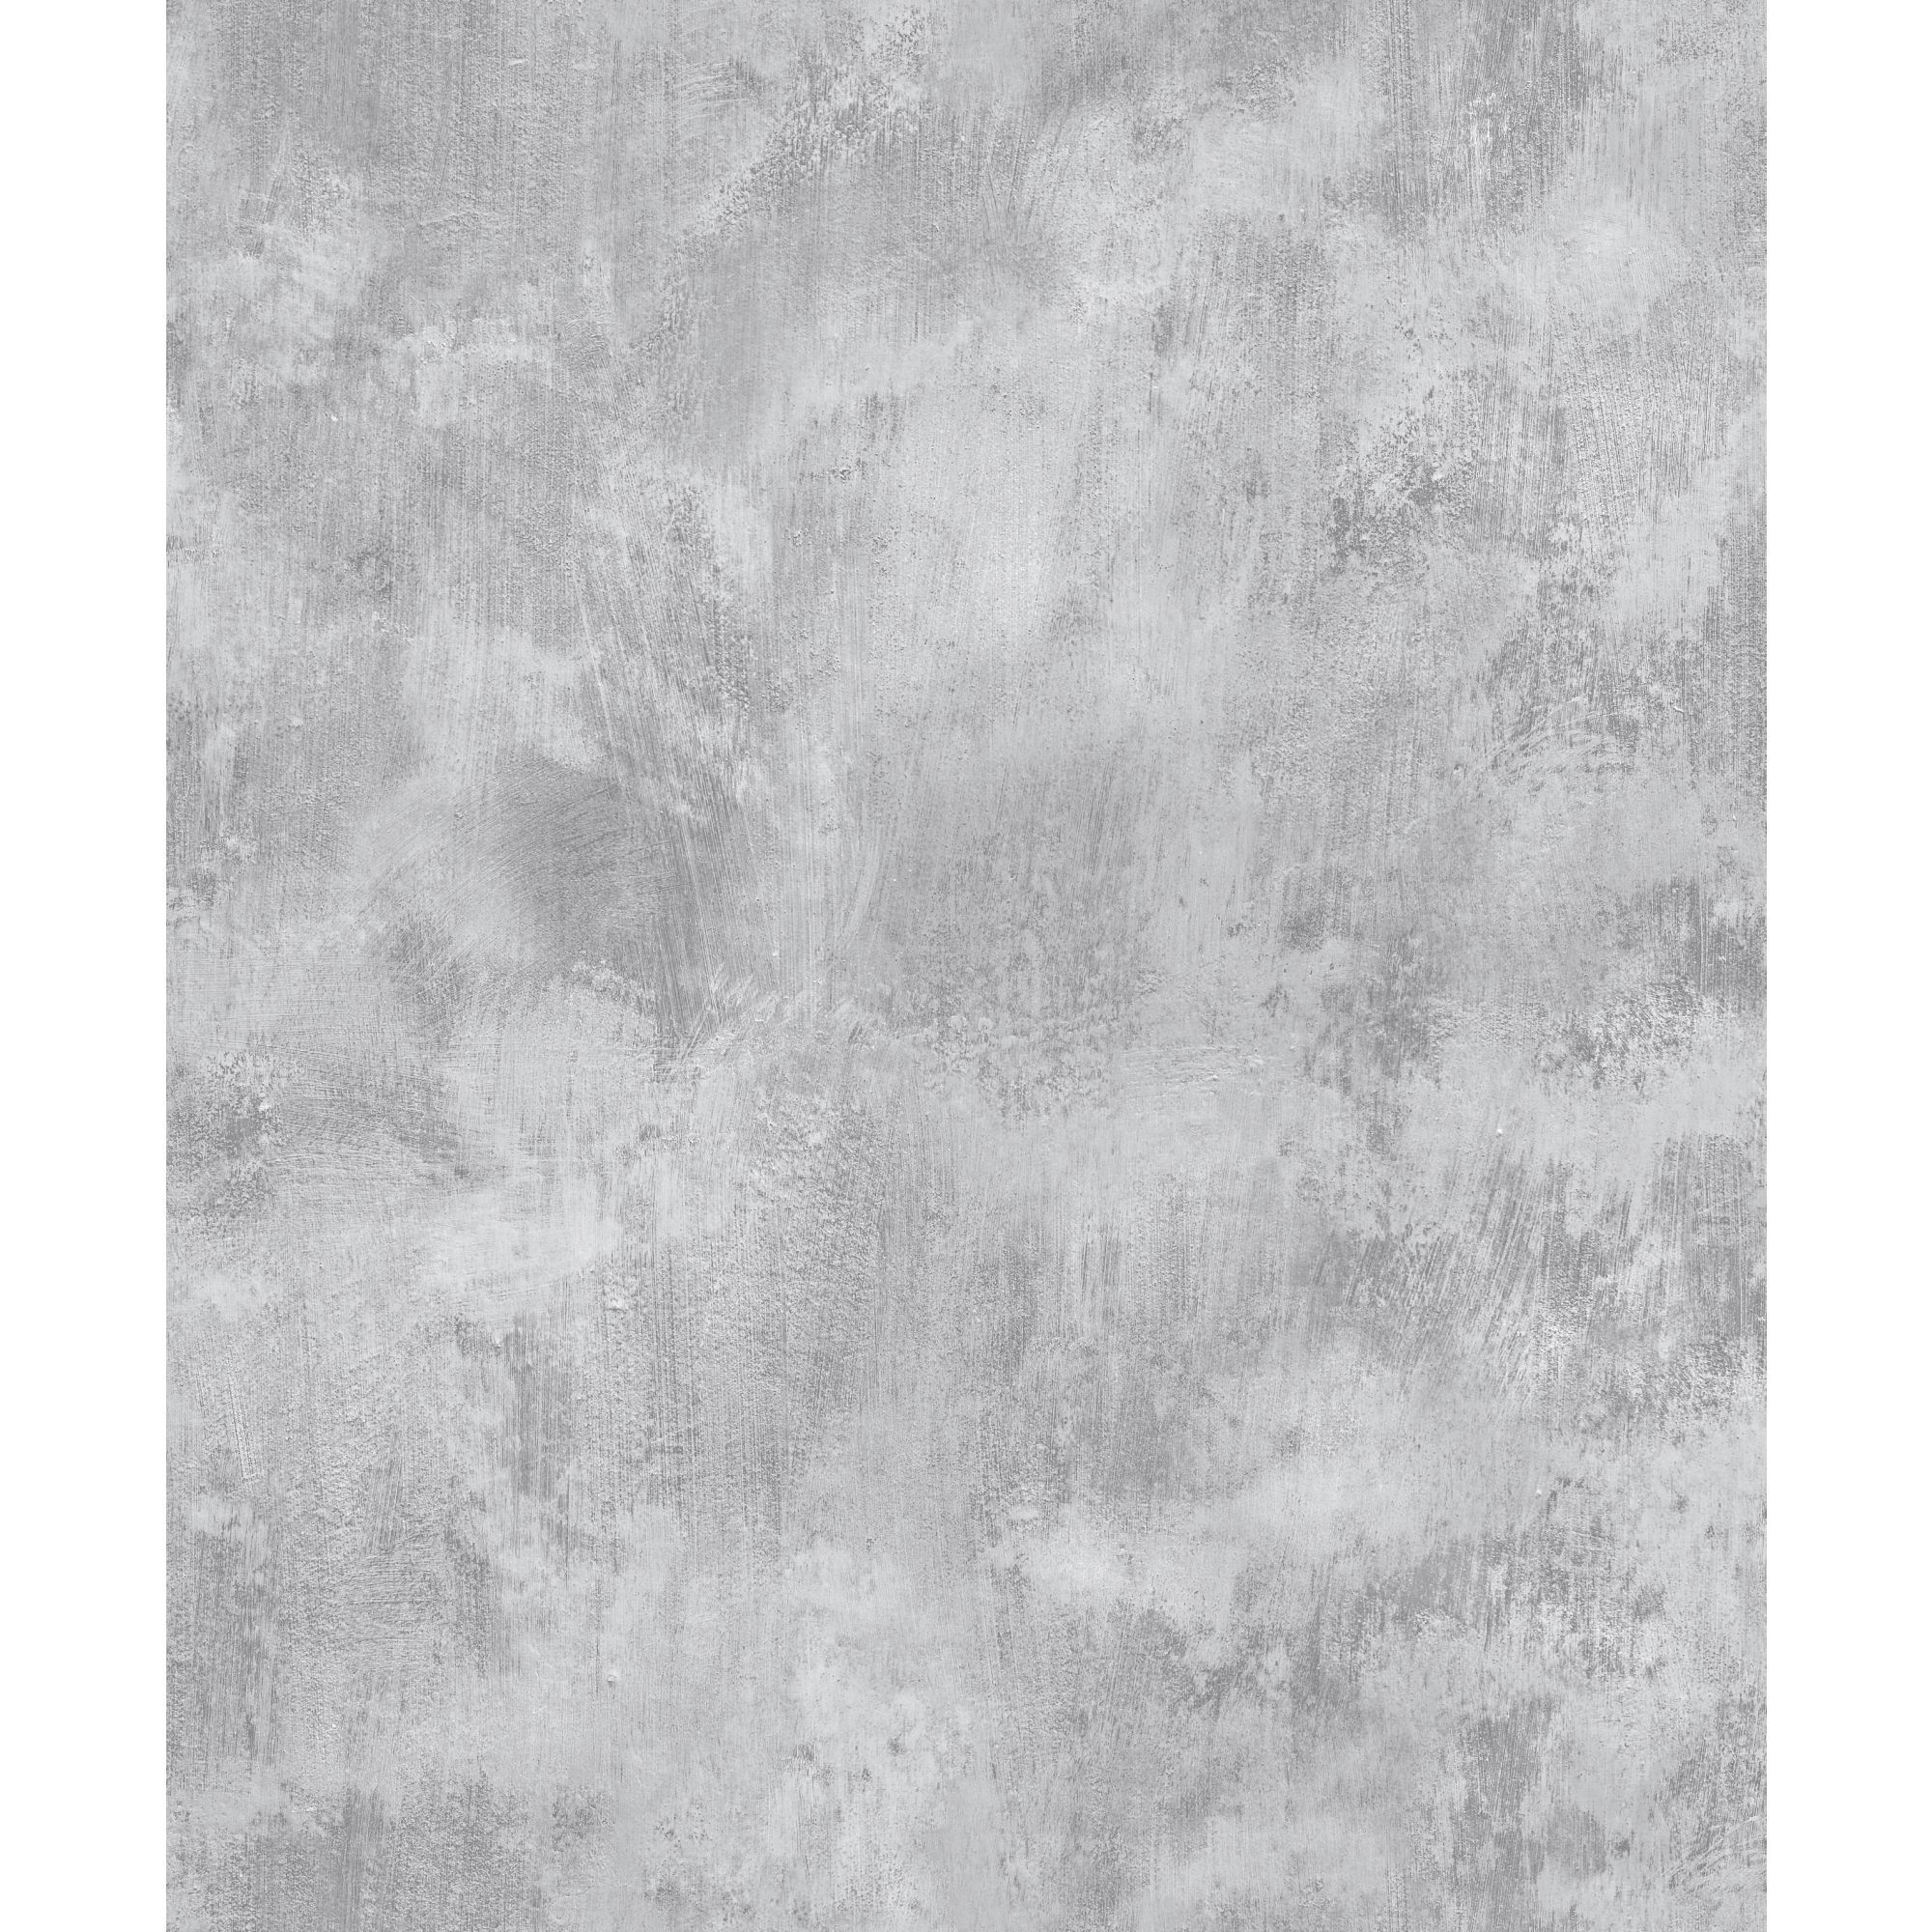 Grandeco Urban wall Grey & white Wallpaper